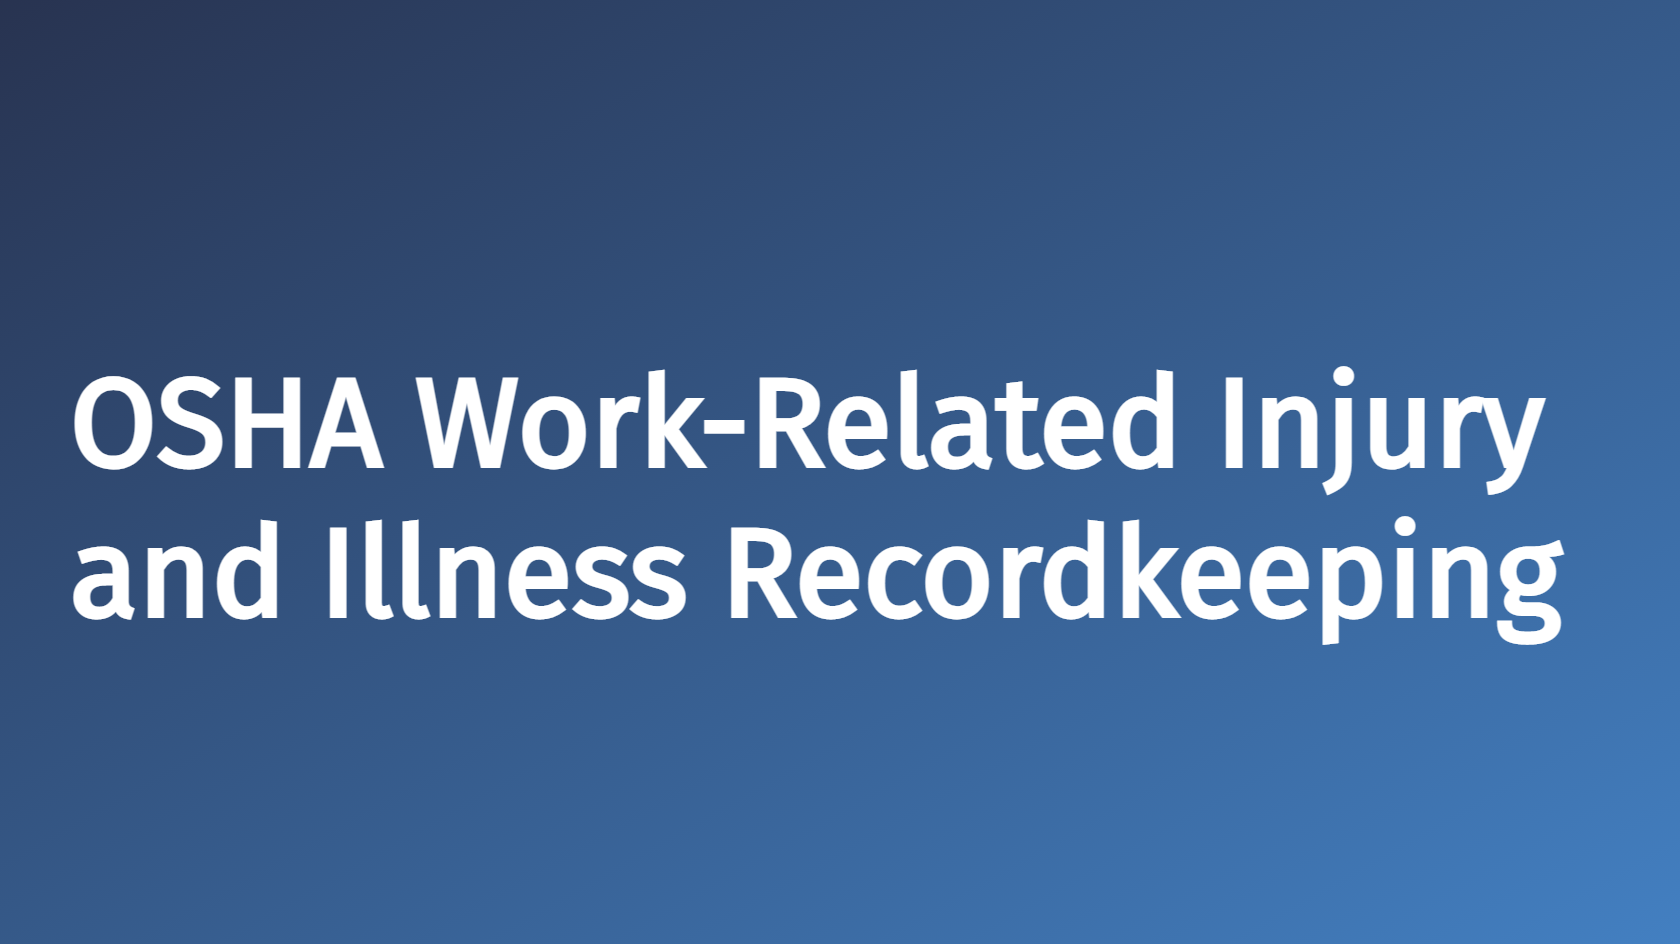 OSHA Work-Related Injury and Illness Record Keeping